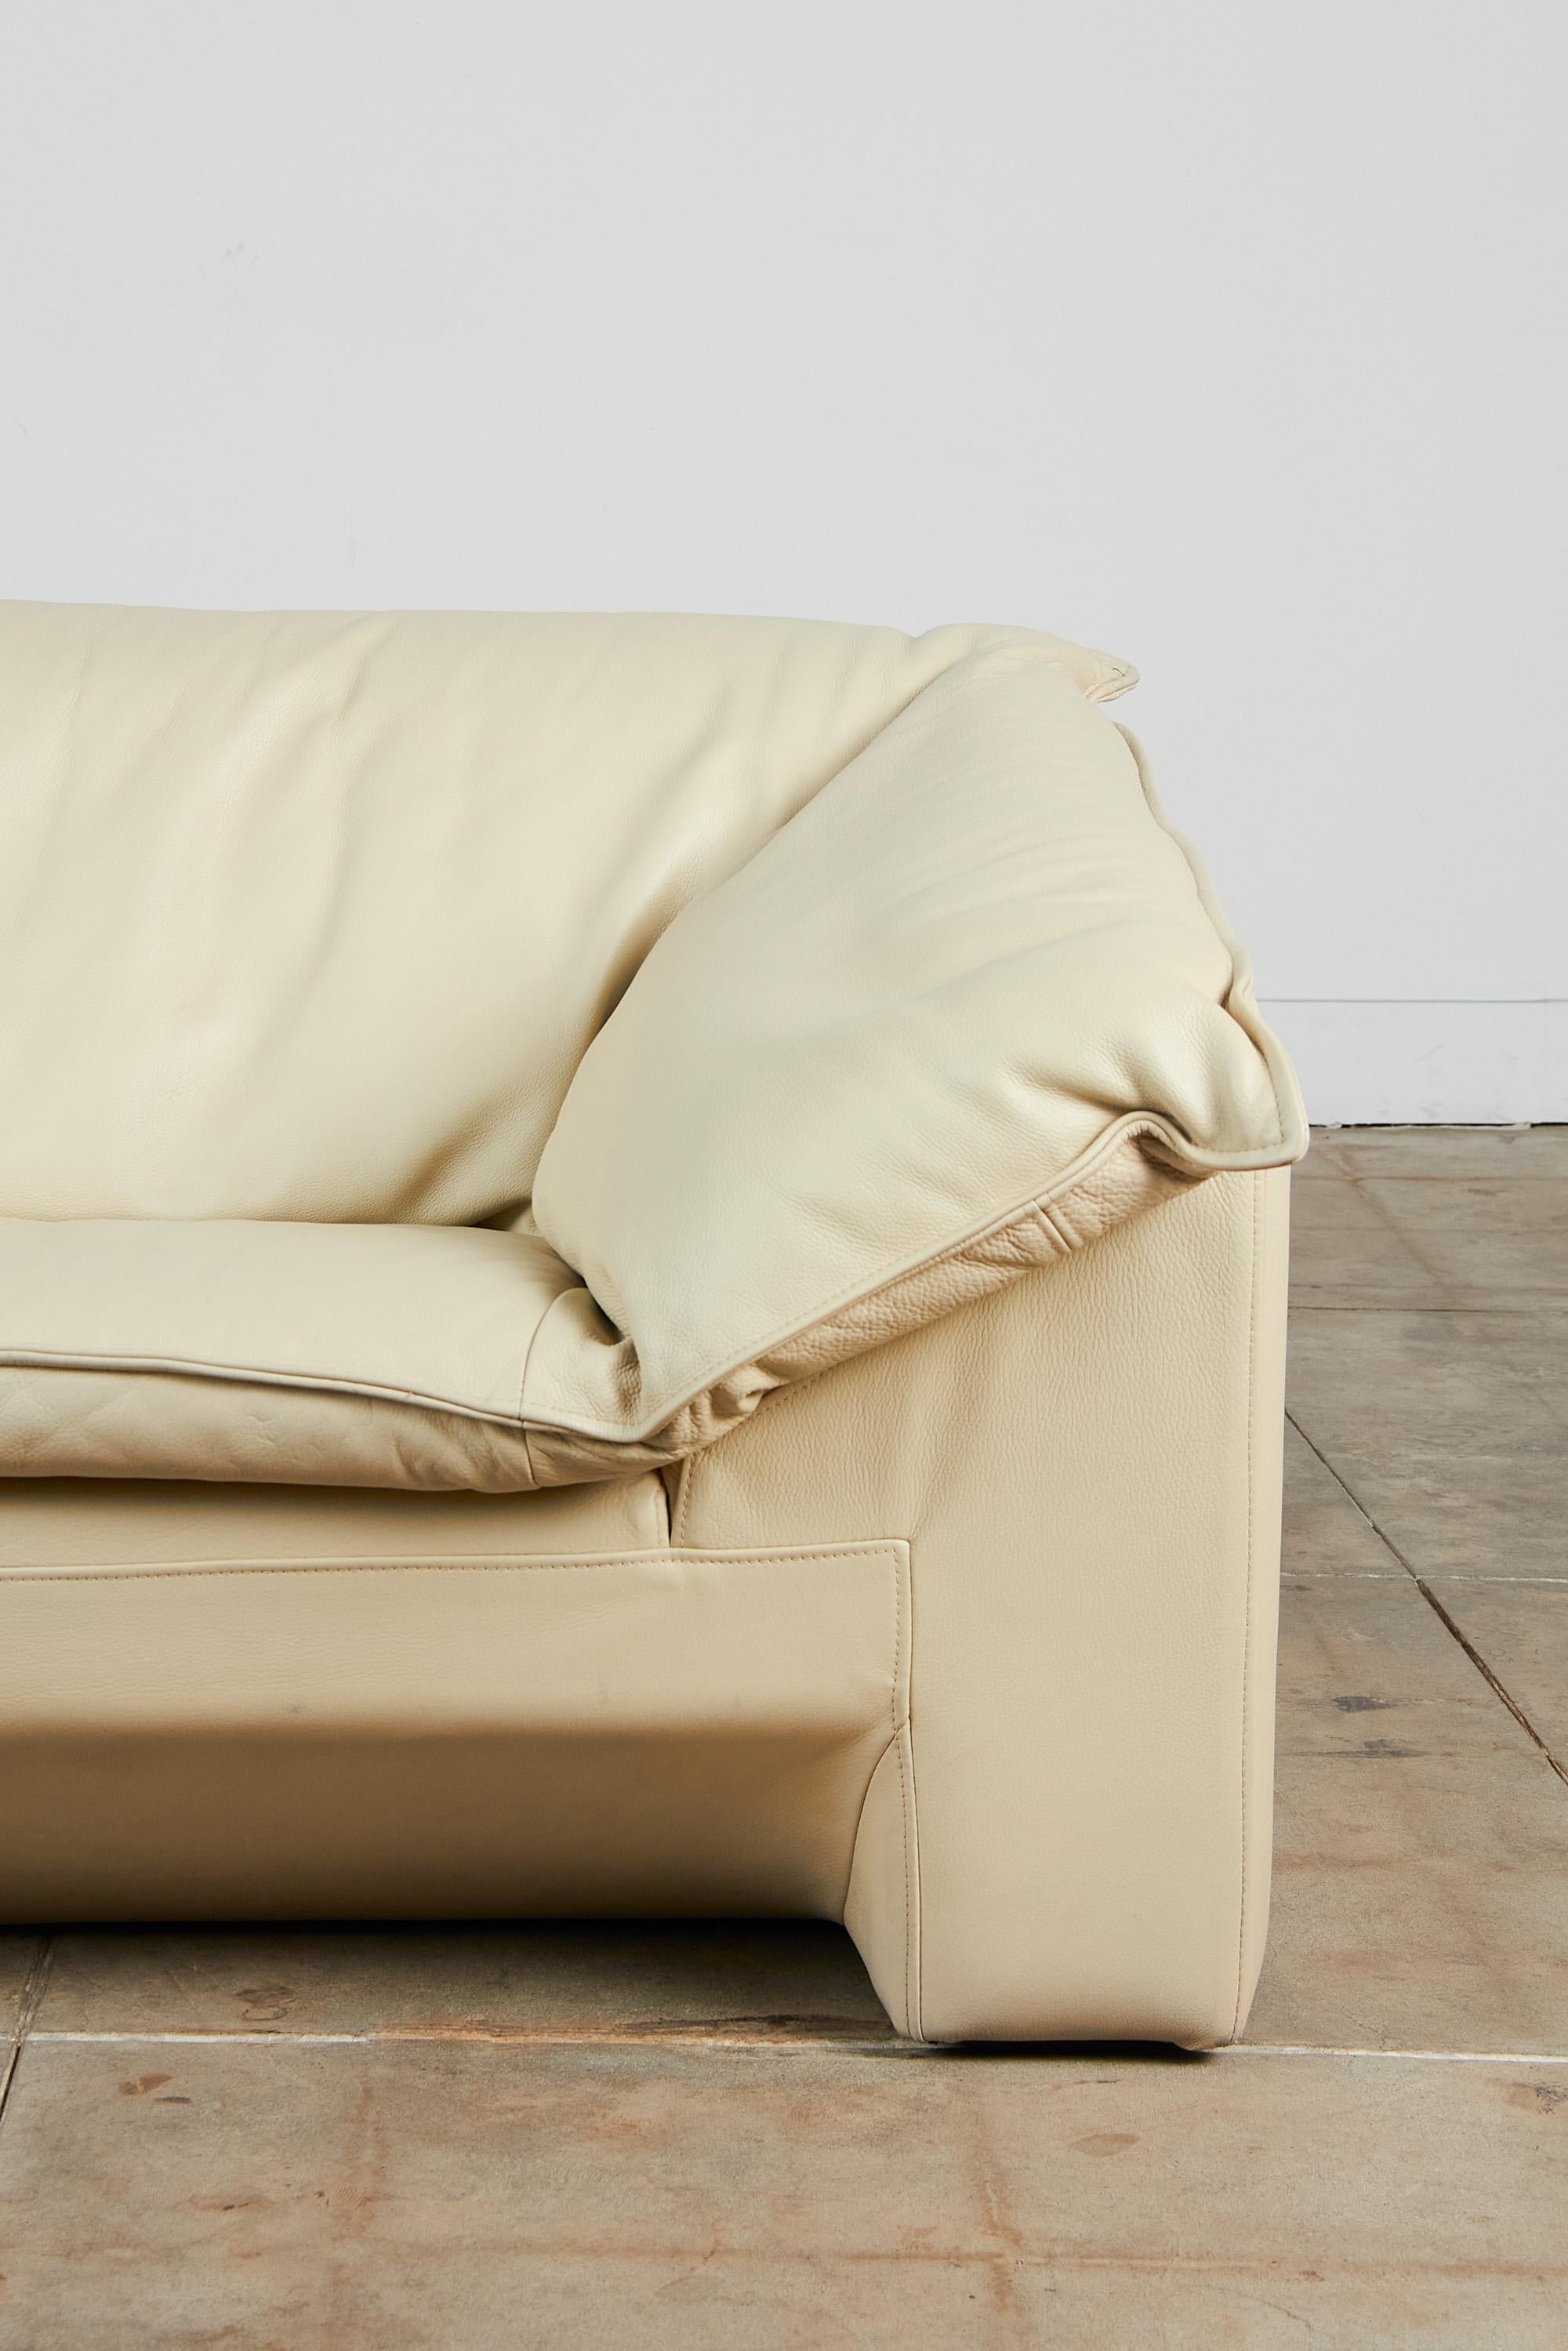 Leather Niels Eilersen “Arizona” Sofa by Jens Juul Eilersen